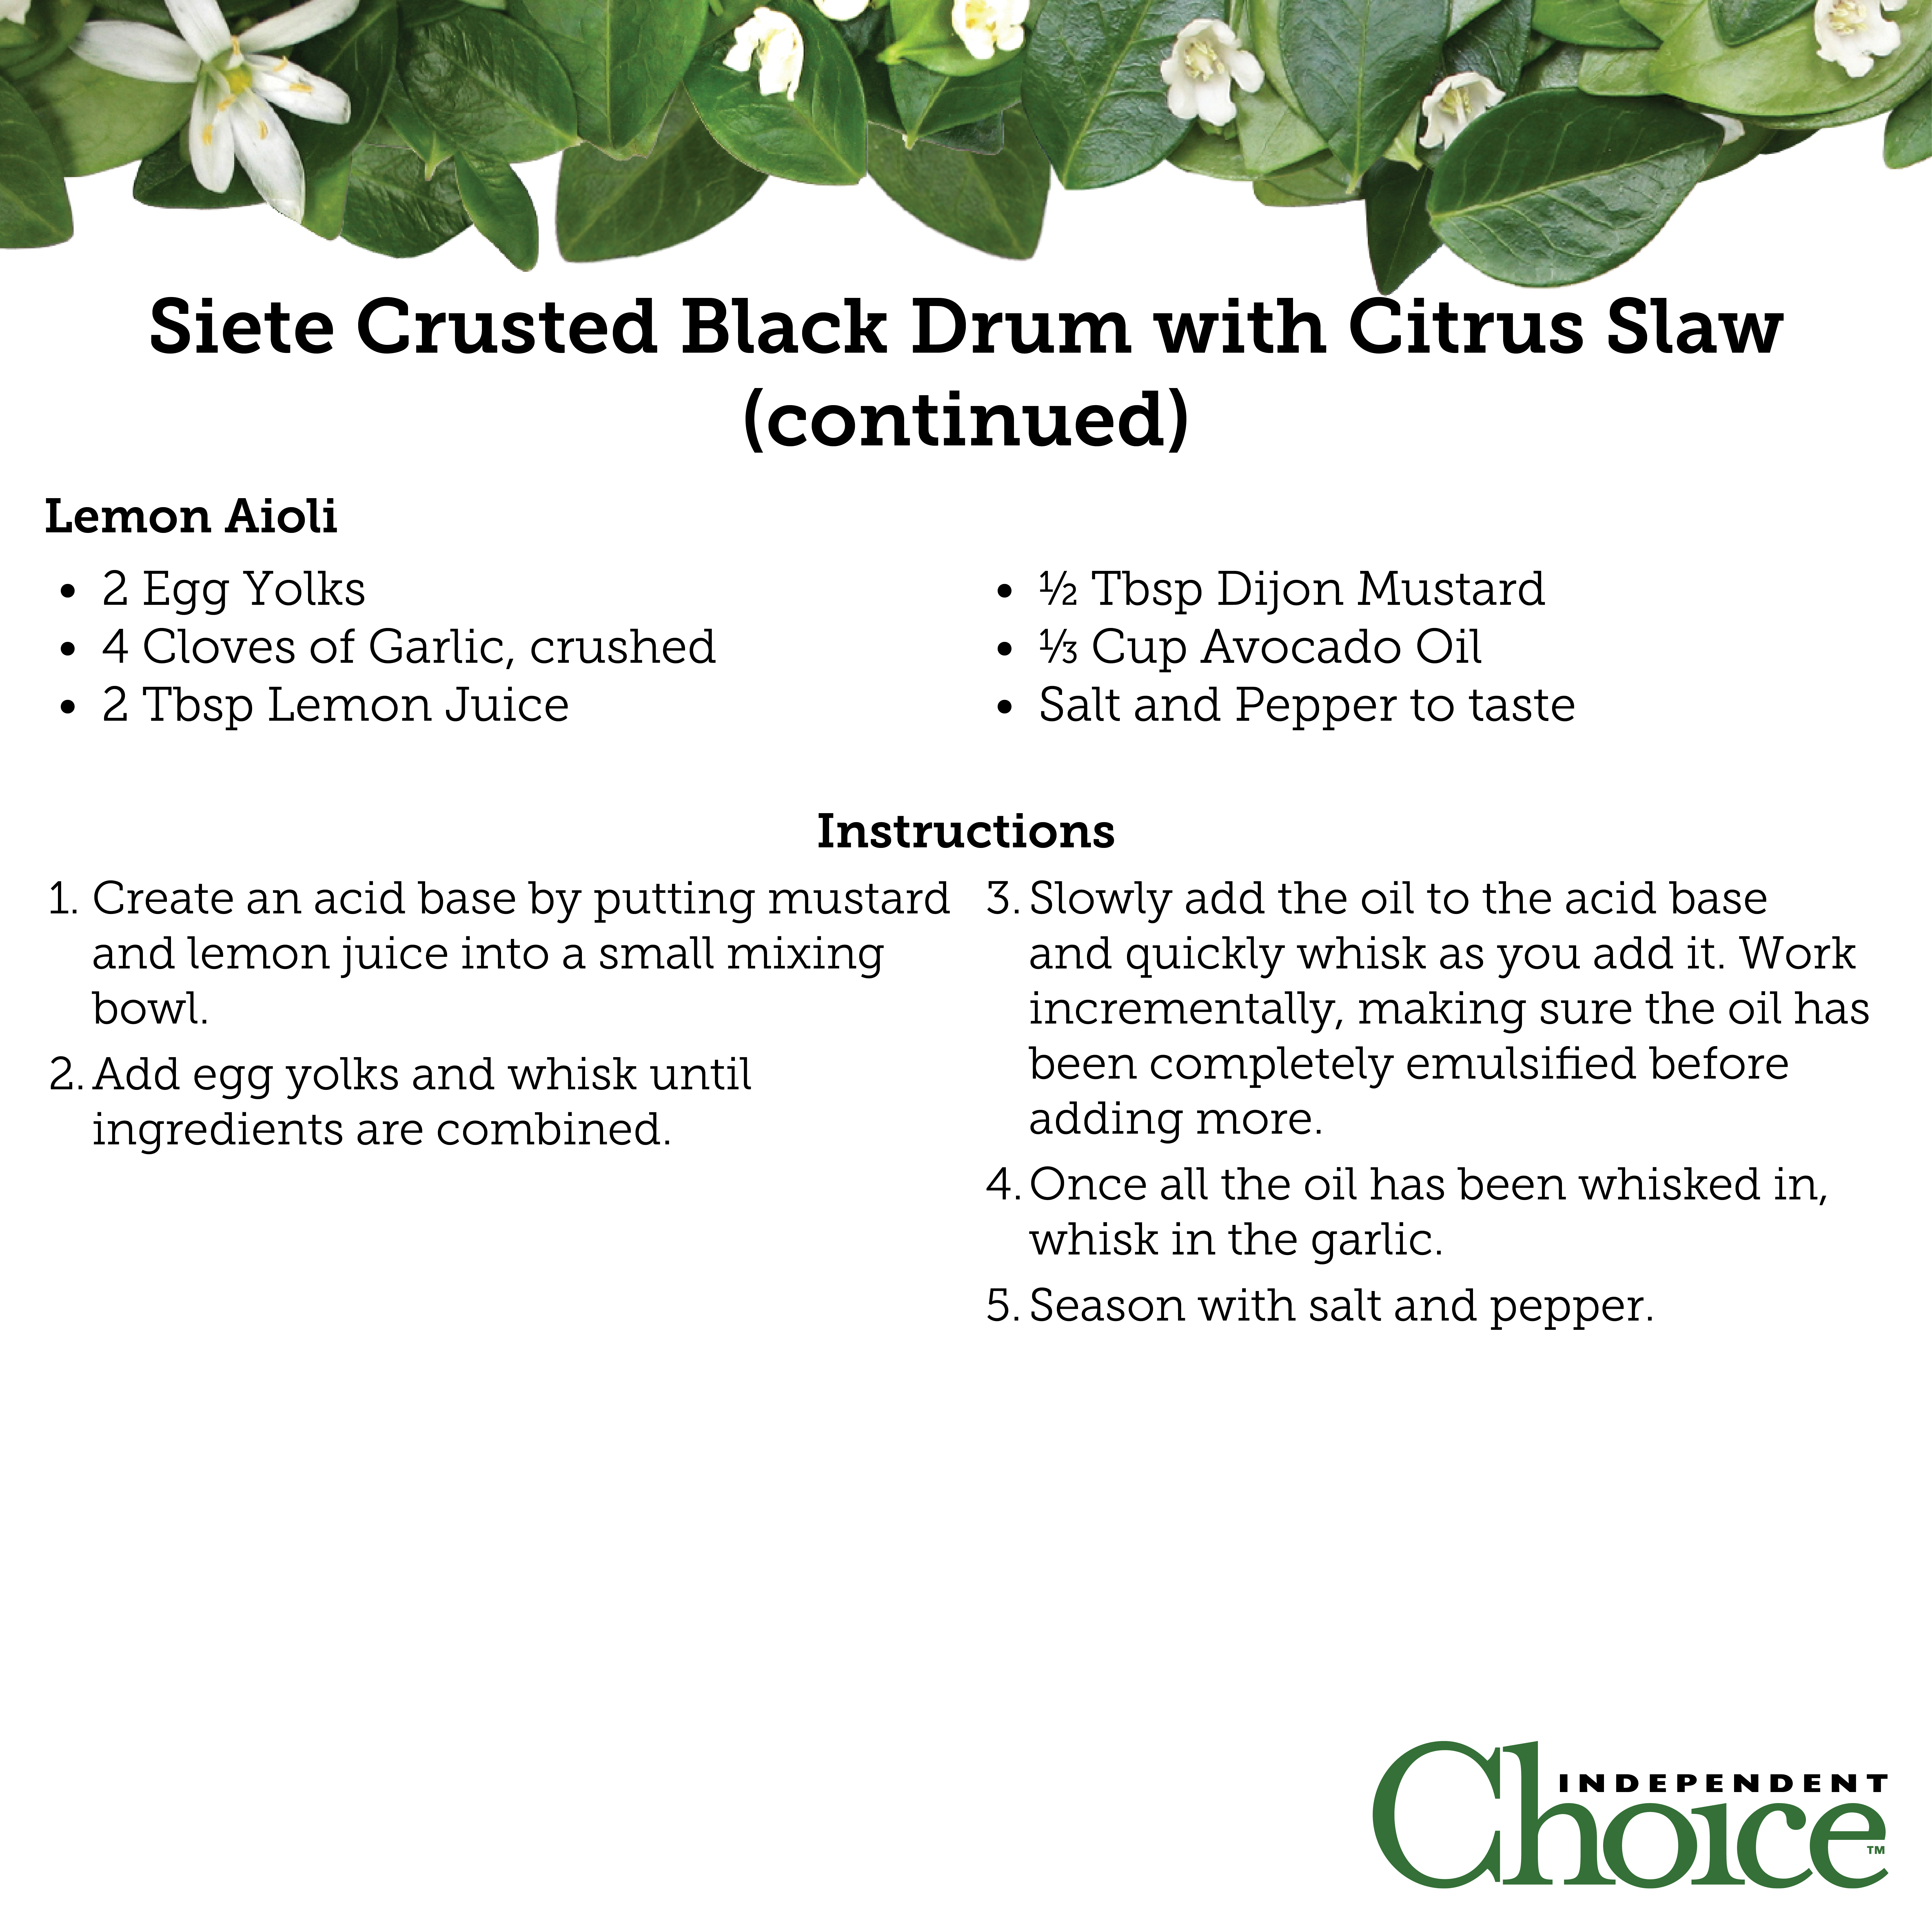 Siete Crusted Black Drum with Citrus Slaw